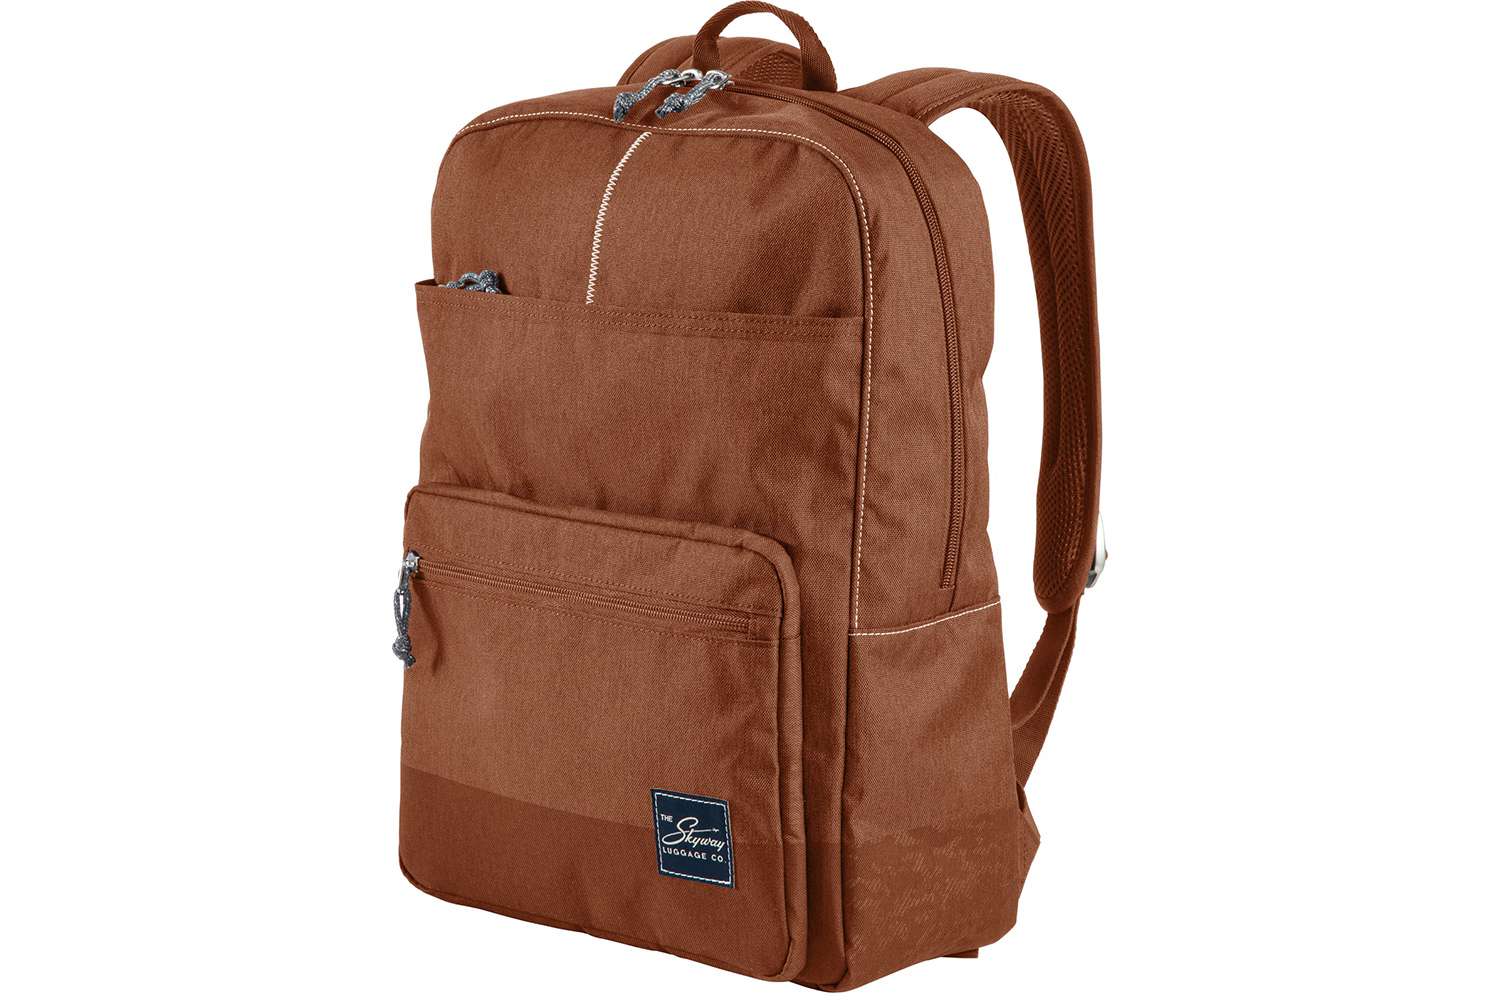 The Skyway Luggage Co. Rainier Simple Everyuday Backpack